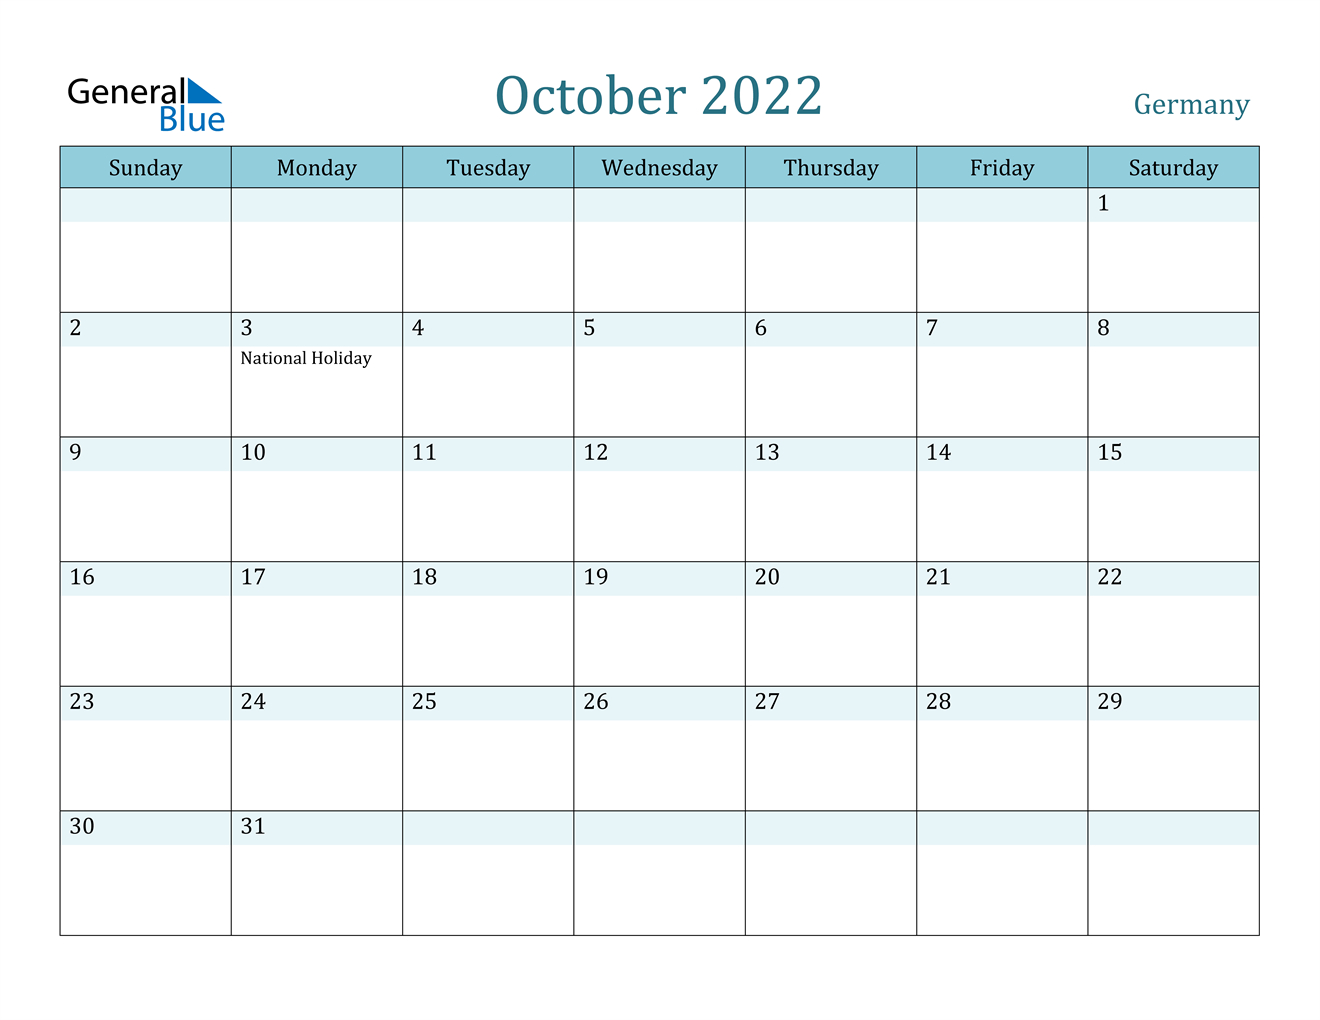 October 2022 Calendar - Germany